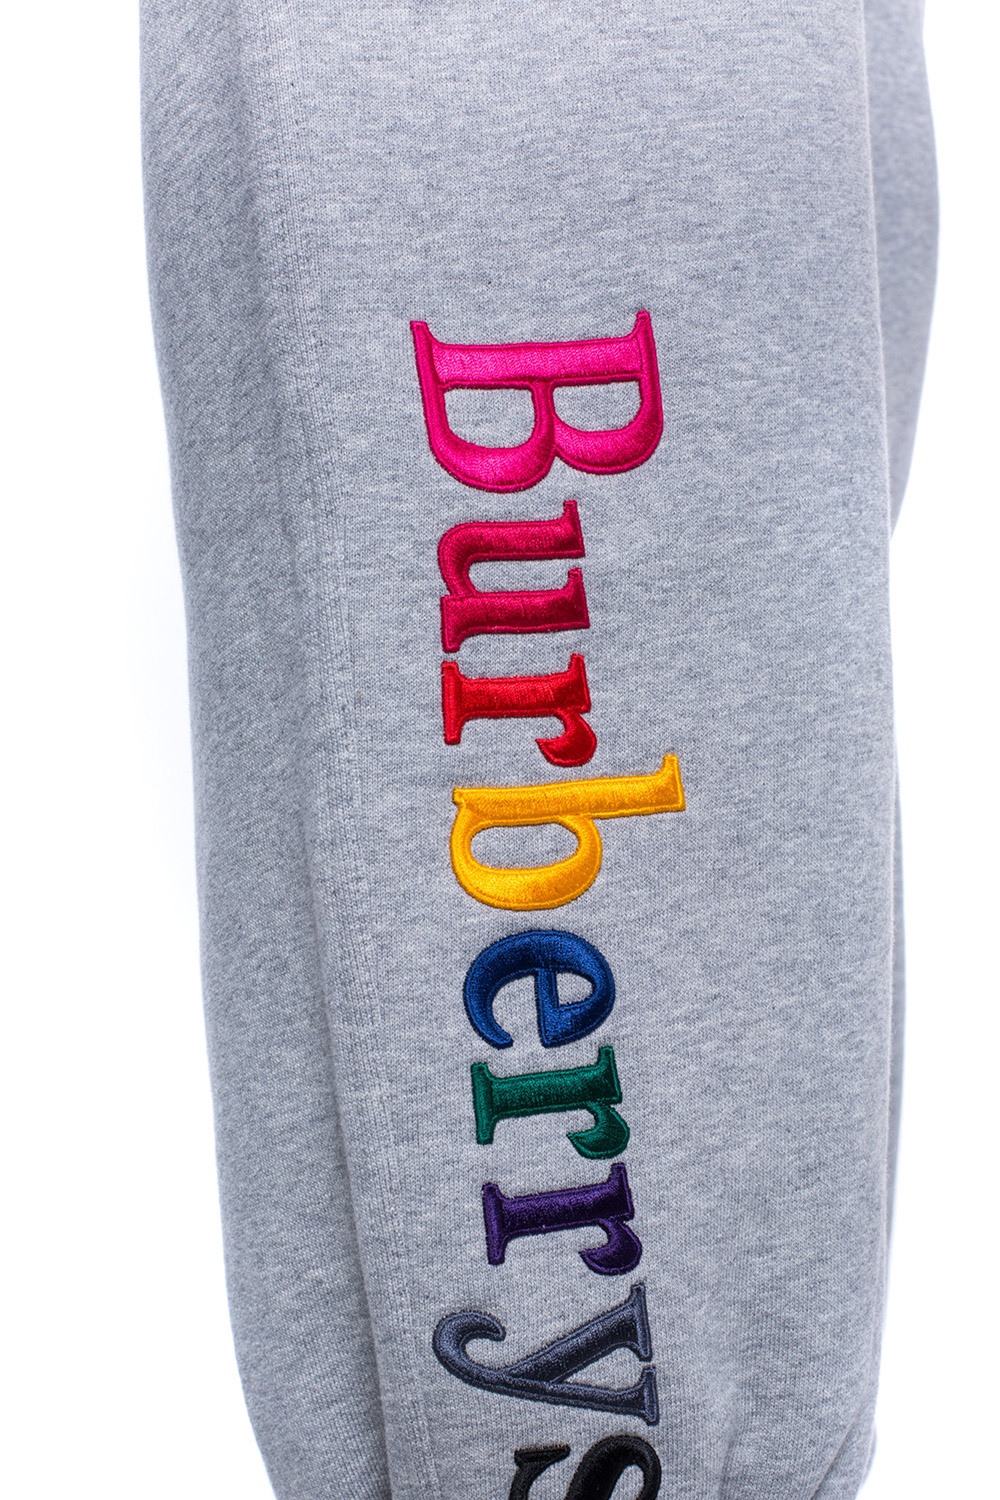 Burberry Rainbow logo sweatpants | Men's Clothing | Vitkac